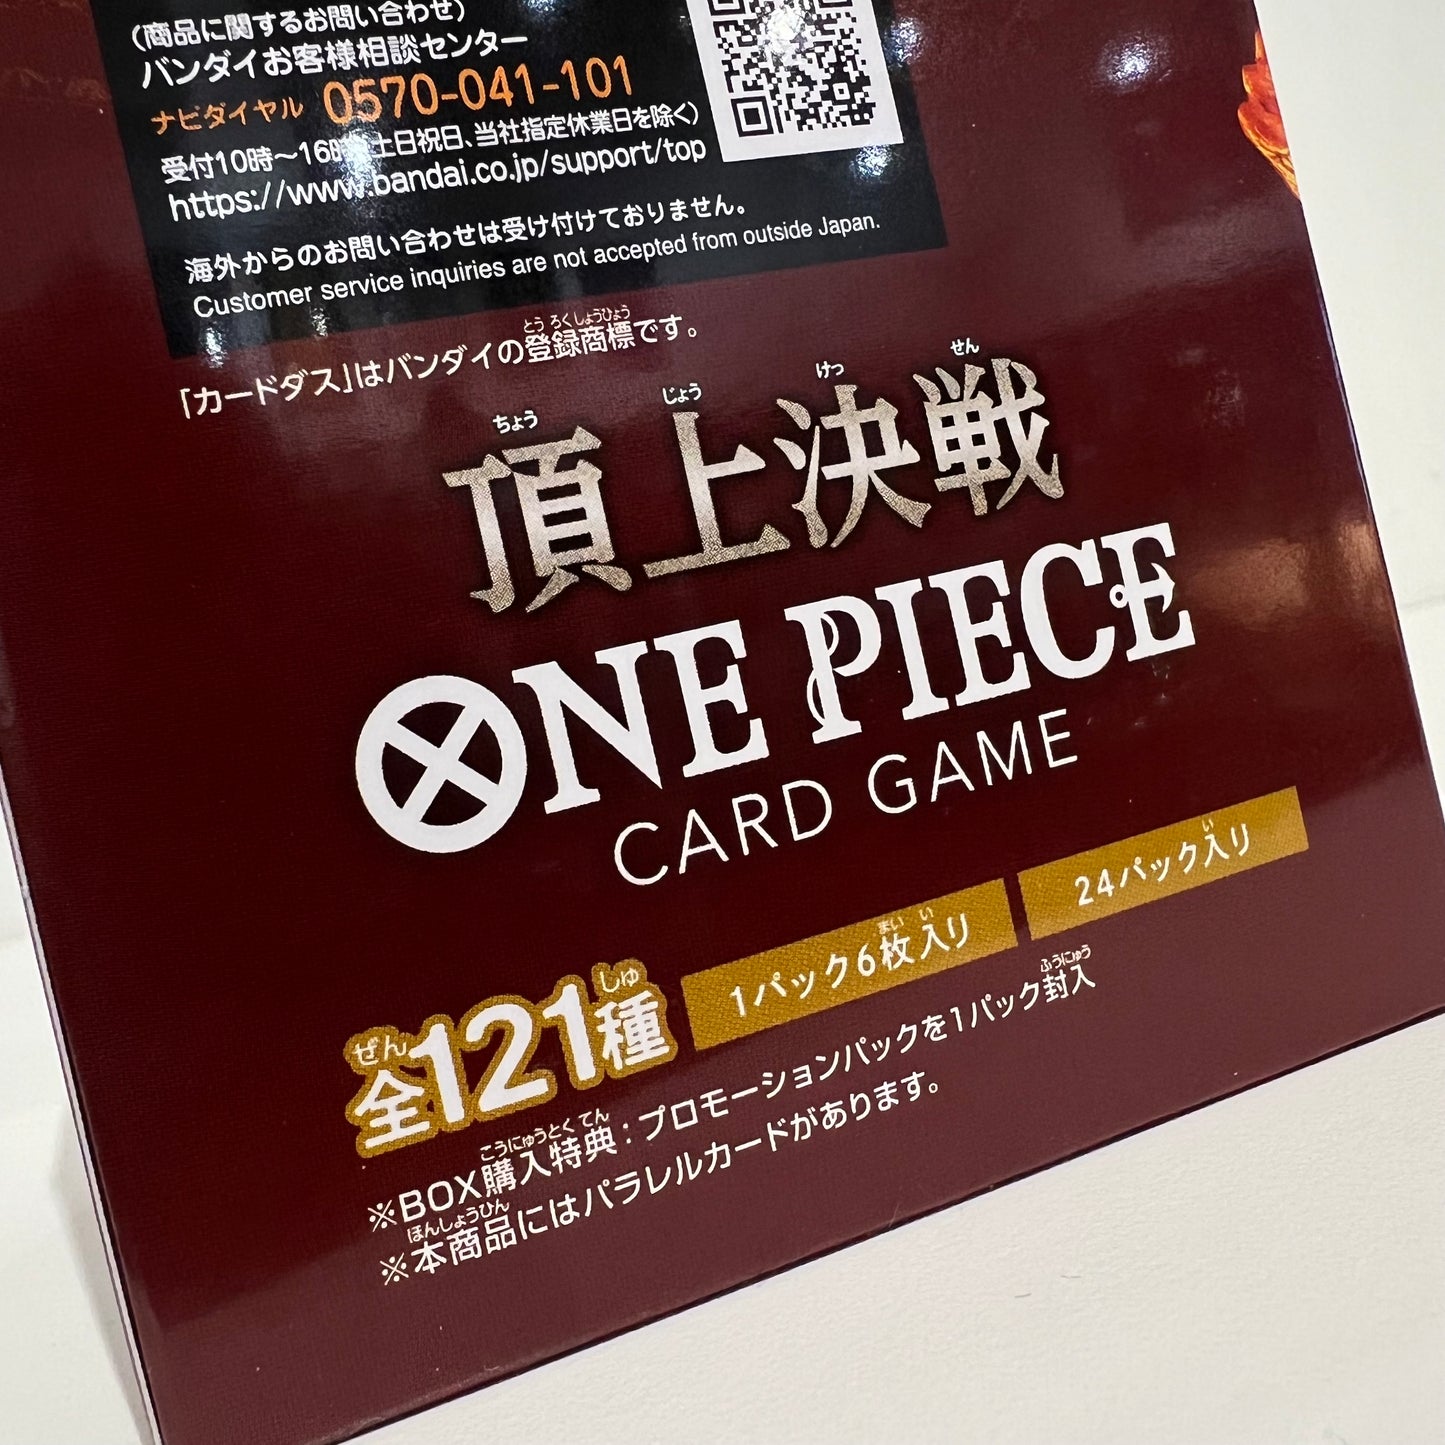 One Piece Card Game (op02) jp